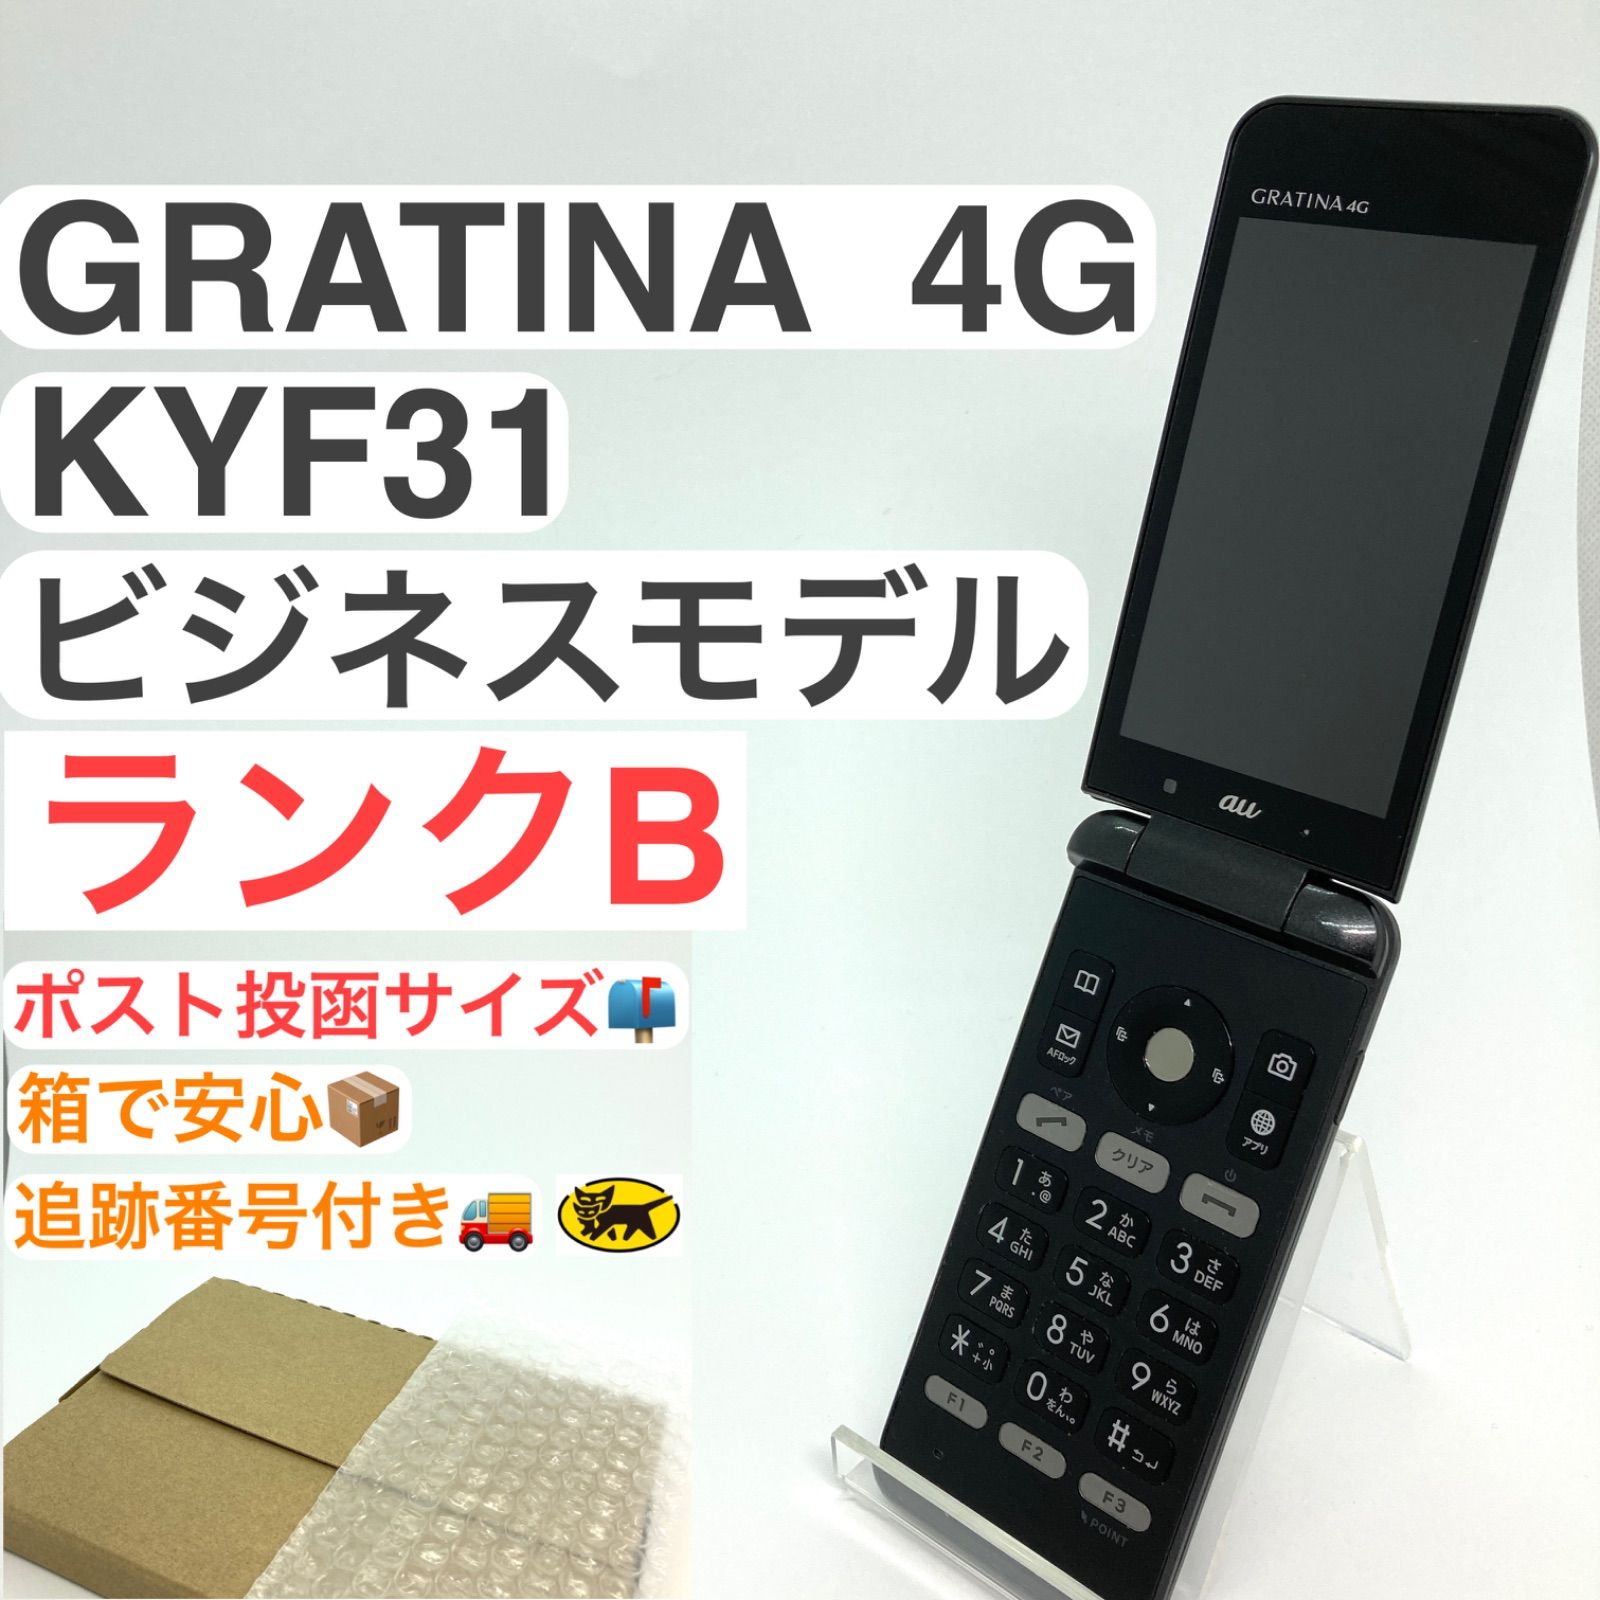 GRATINA KYF37 SWA ホワイト 新品未使用 simロック解除済み - 携帯電話本体